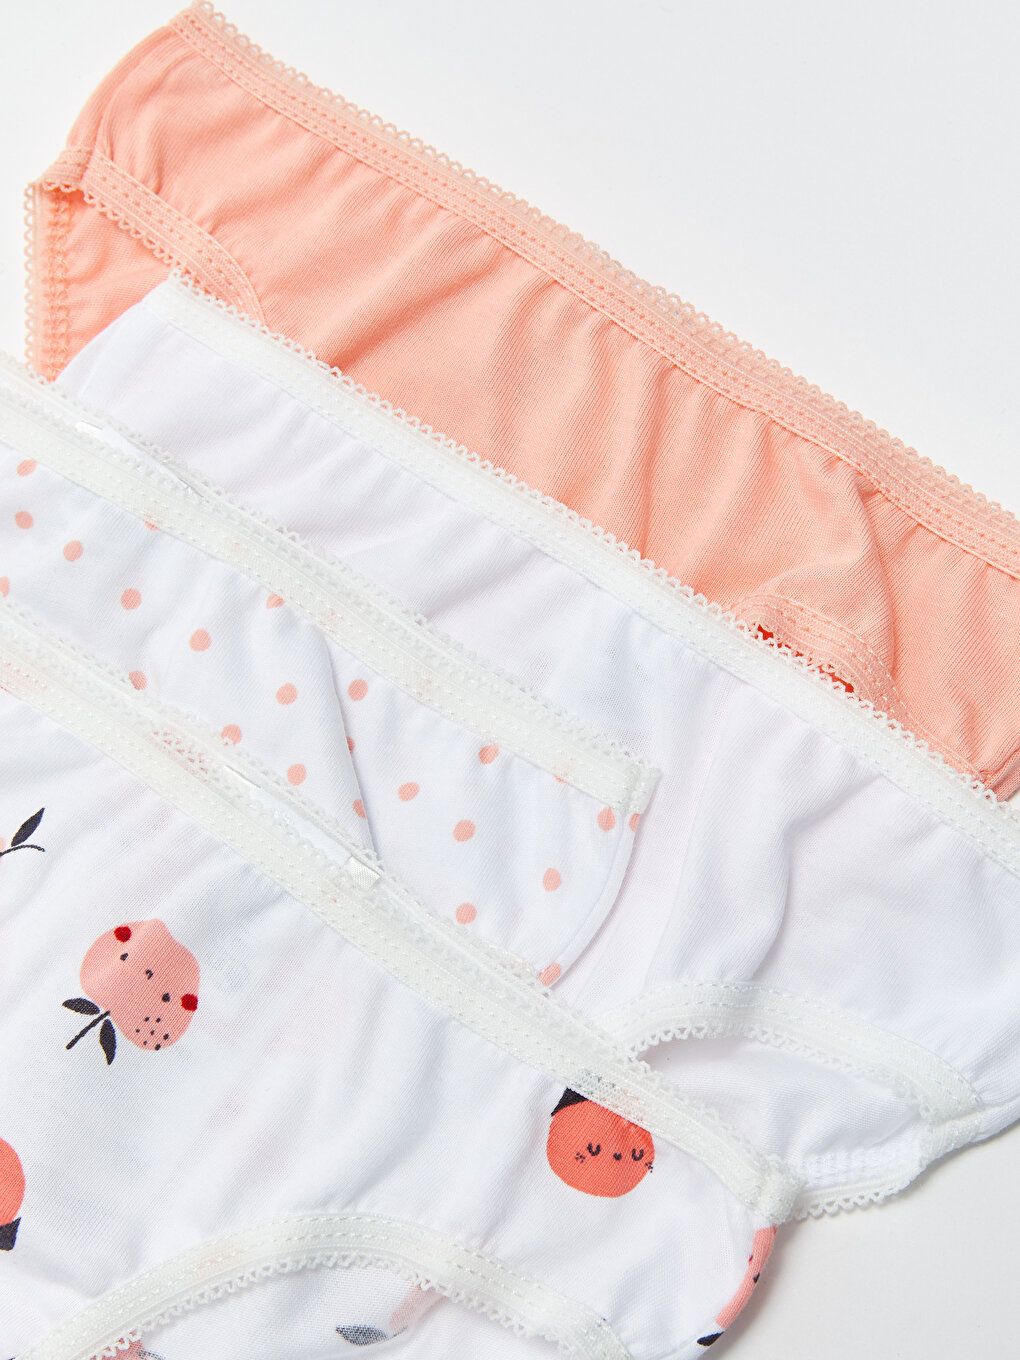 Elastic Waist Printed Baby Girl Panties 4-pack -S36078Z1-LRA - S36078Z1-LRA  - LC Waikiki